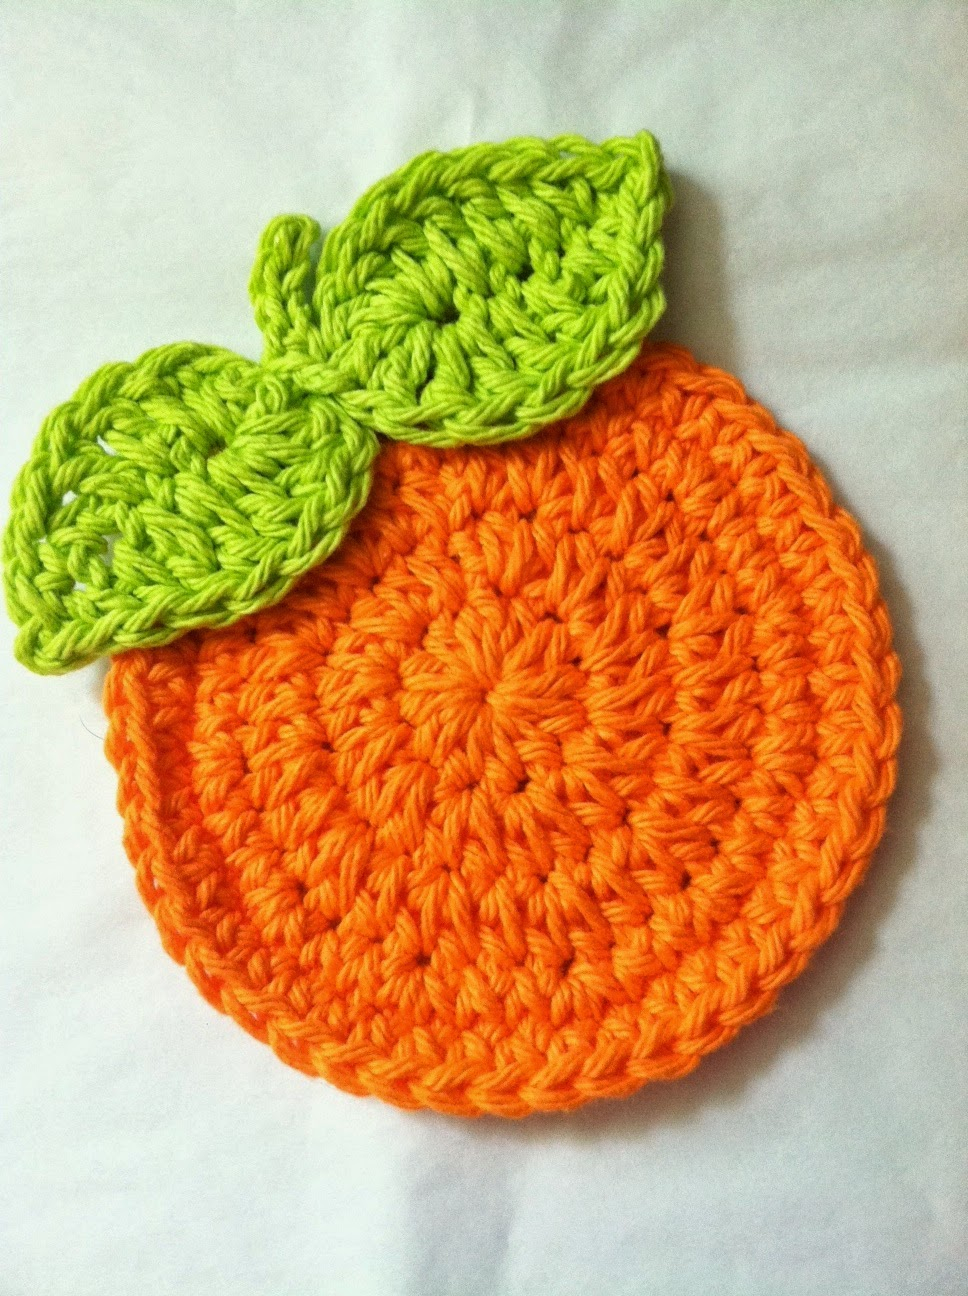 Coaster Crochet Pattern Lakeview Cottage Kids Free Pattern For Oranges Crochet Coaster Set